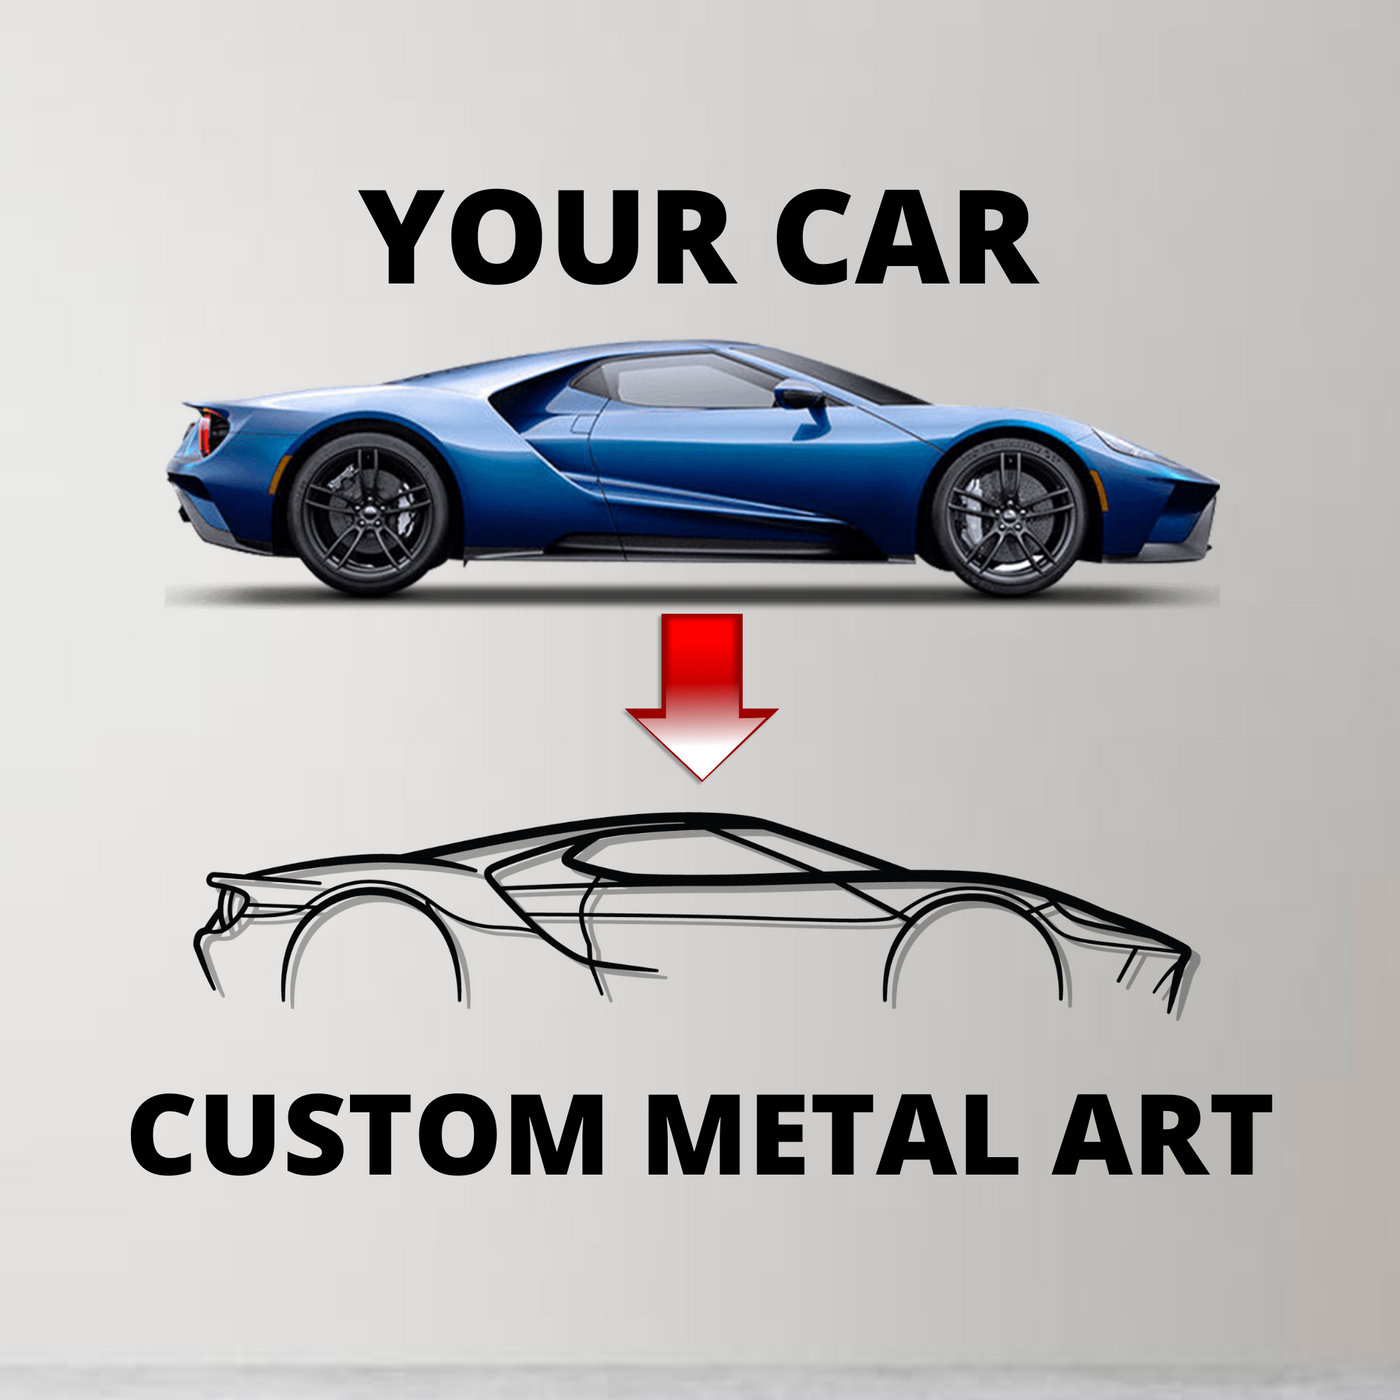 Golf MK4 Cabrio Classic Silhouette Metal Wall Art